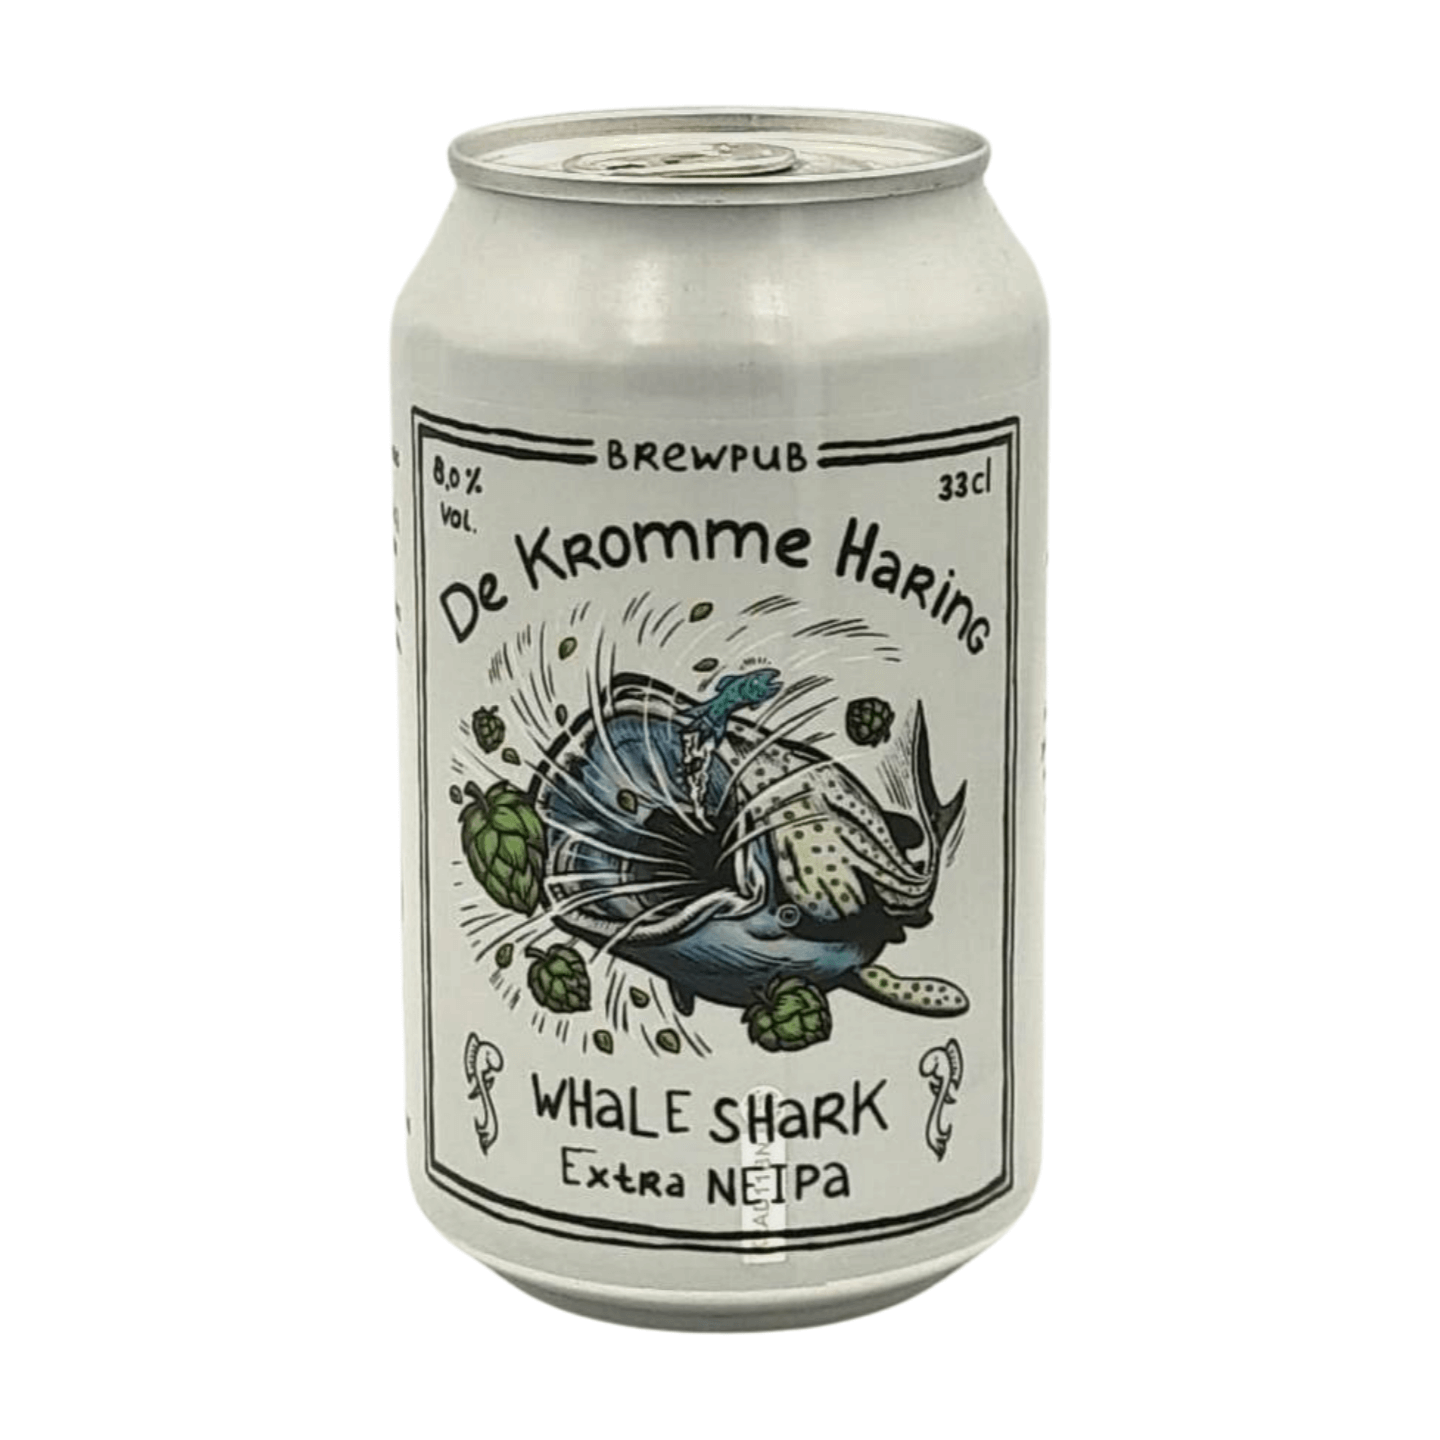 De Kromme Haring Whale Shark V3 | New England DIPA Webshop Online Verdins Bierwinkel Rotterdam